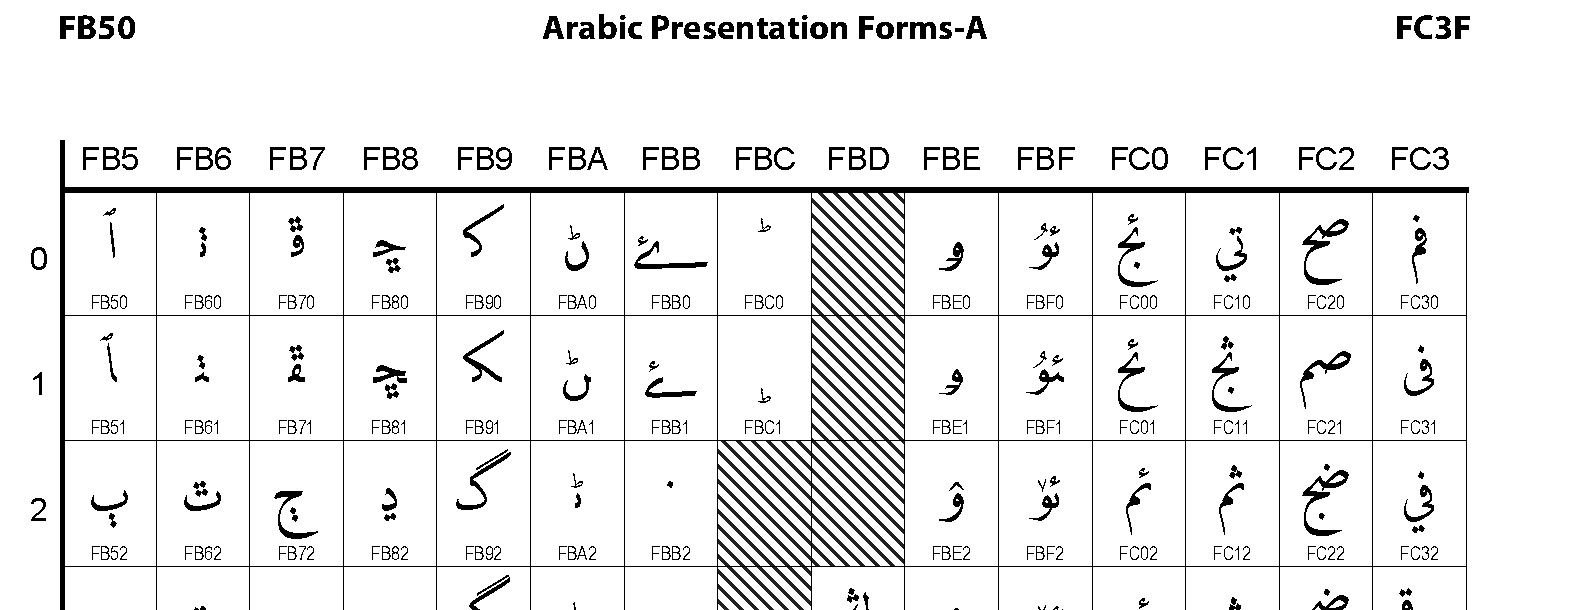 Unicode - Arabic Presentation Forms-A